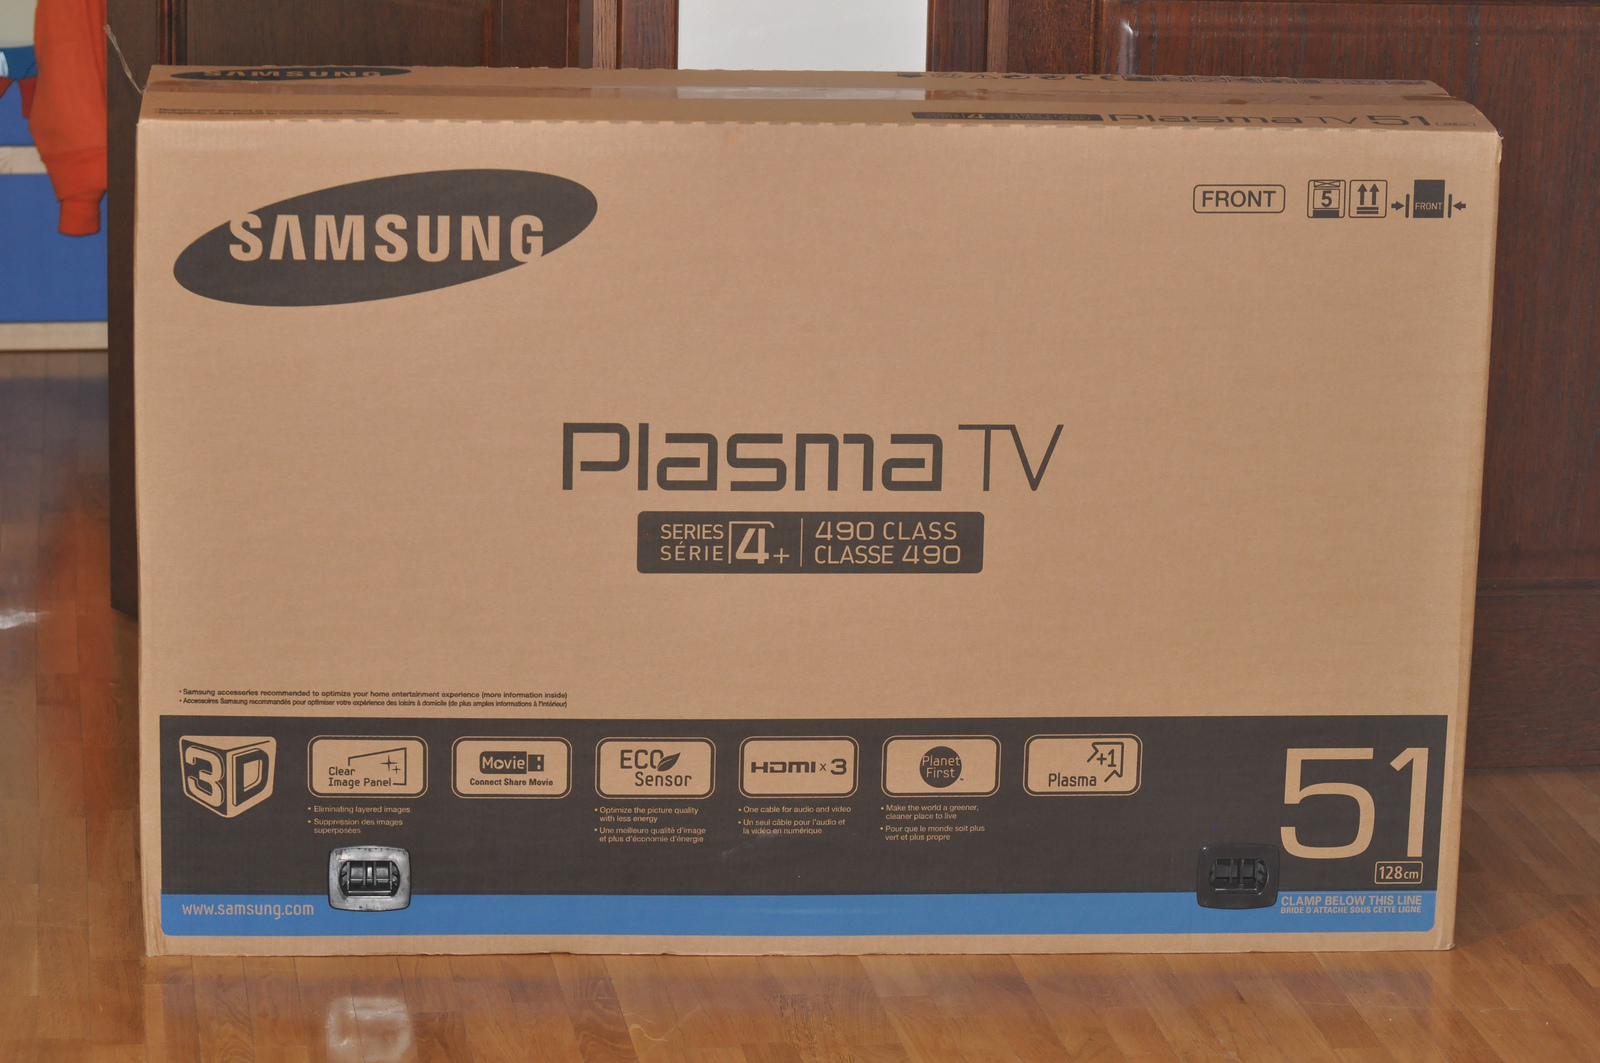 Plasma TV 51 inch pic 2 of 2 | Flickr - Photo Sharing!